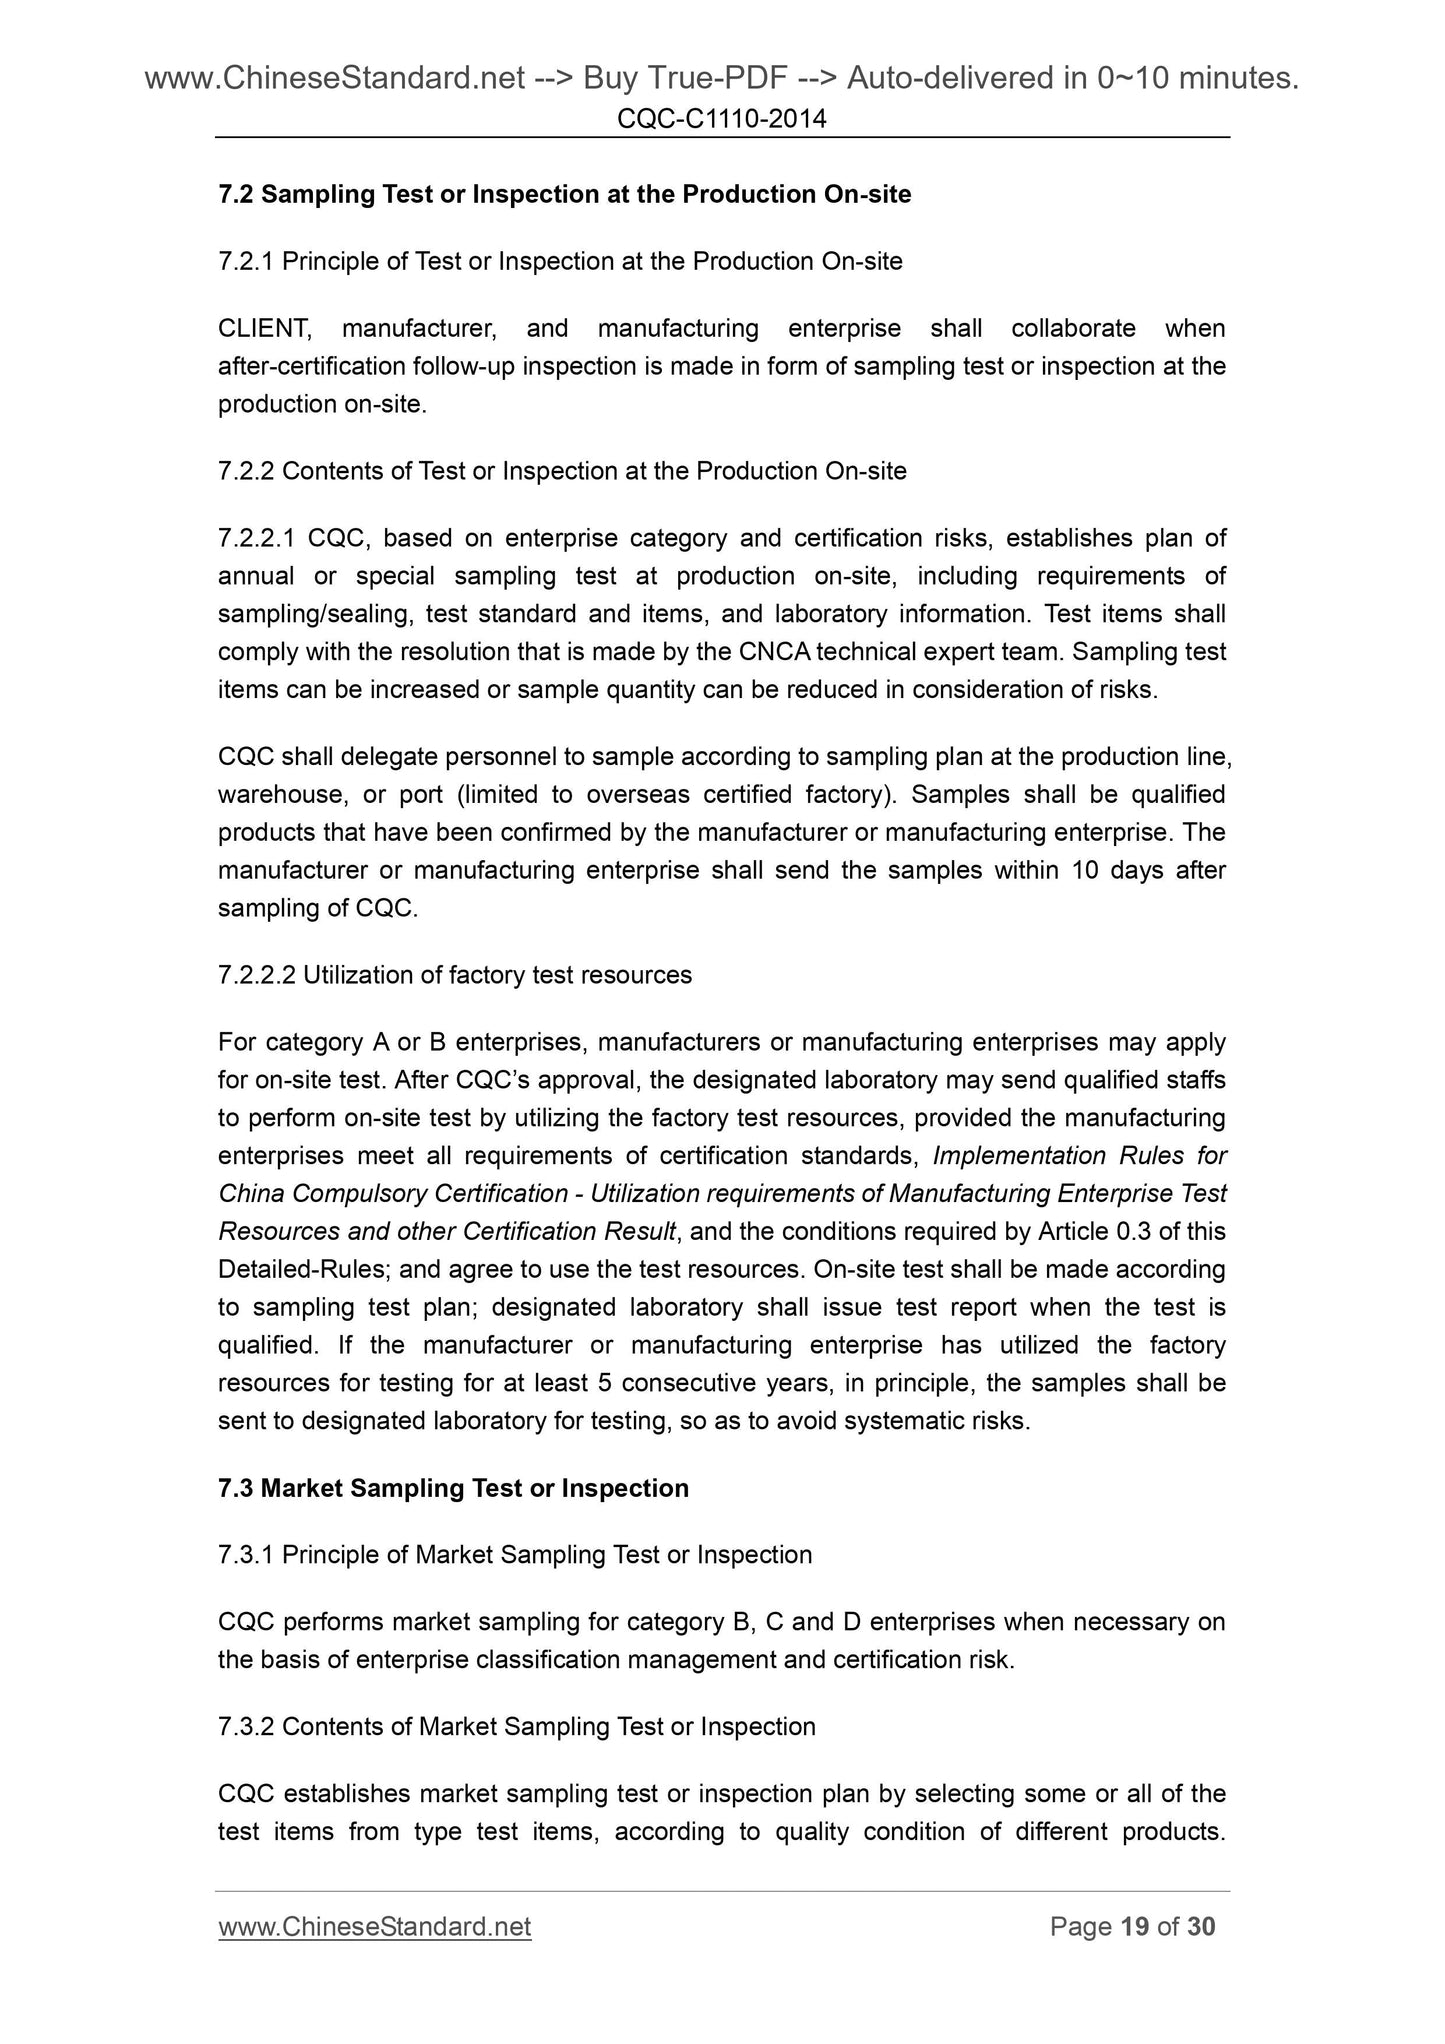 CQC-C1110-2014 Page 9